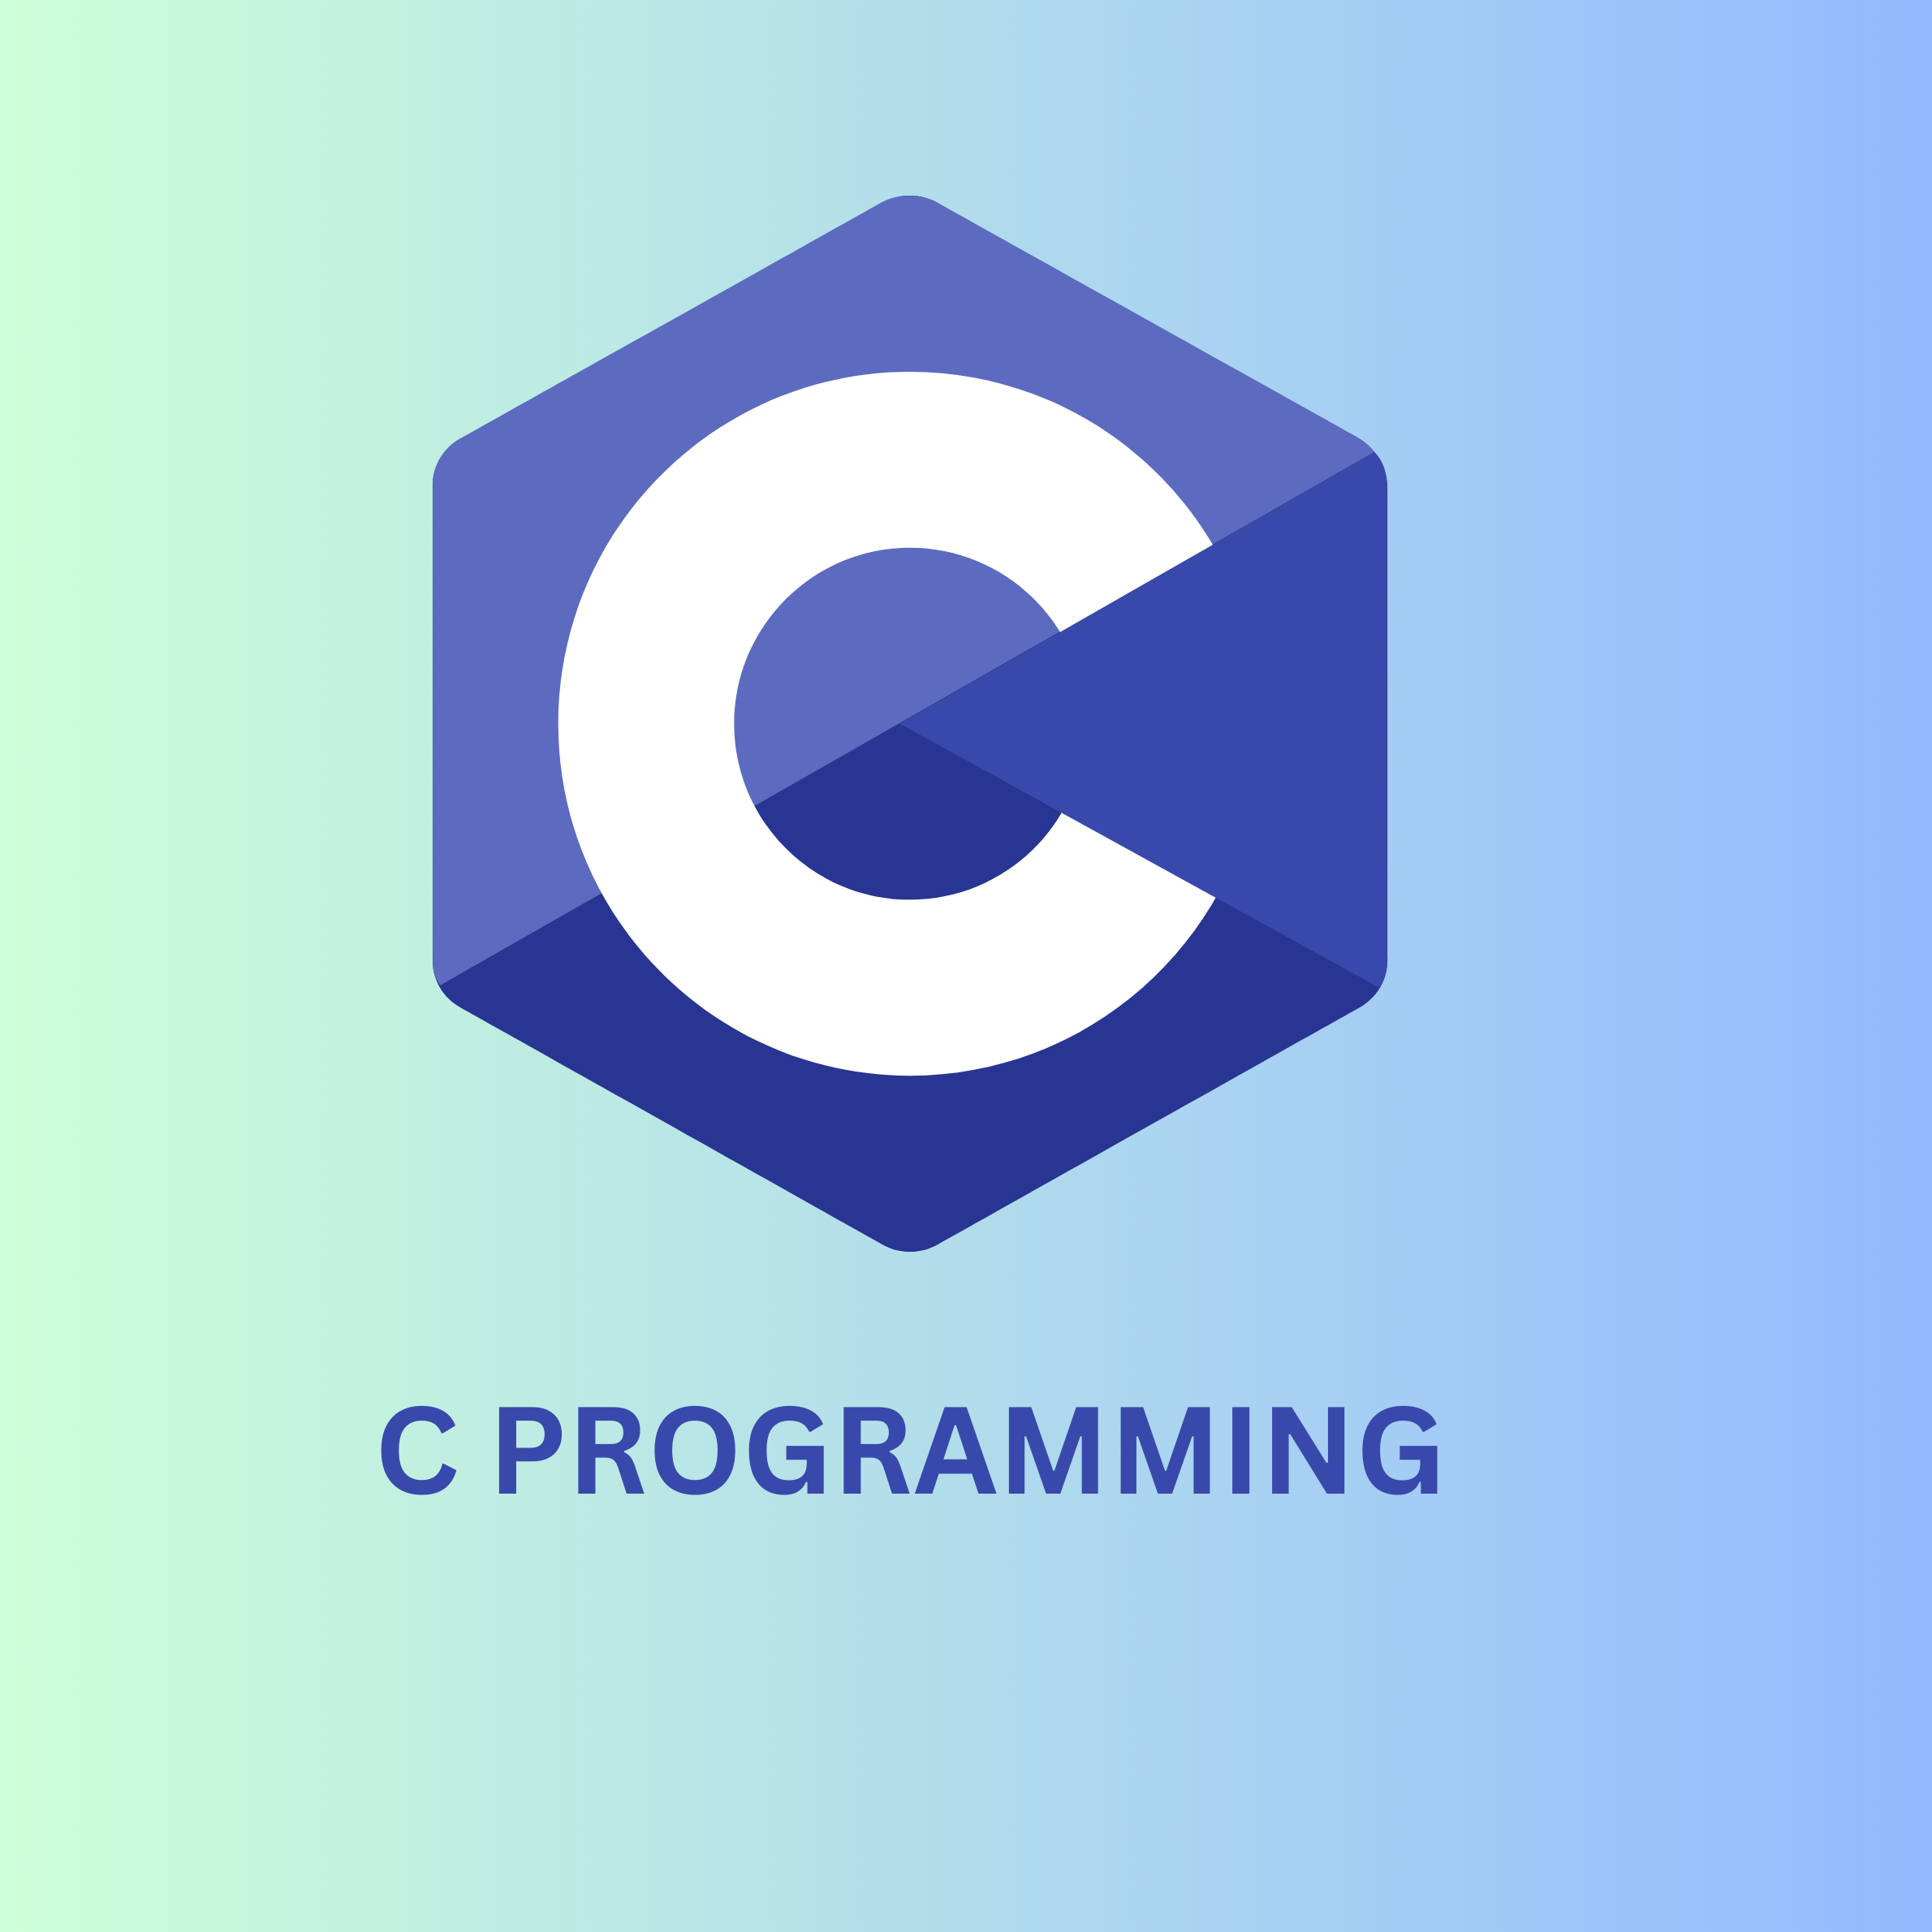 C Logo Animation by Cameron Etheredge on Dribbble